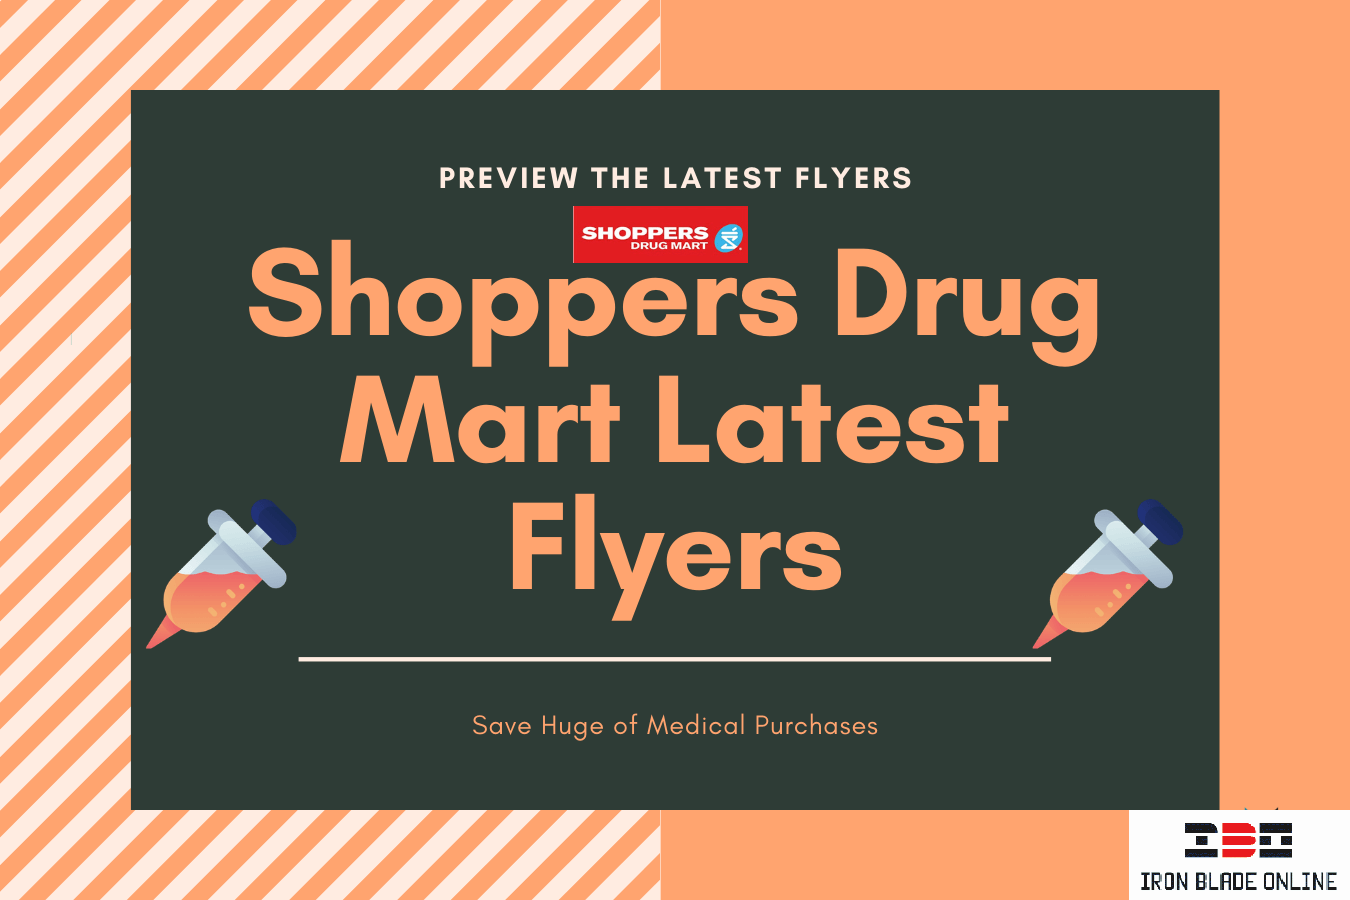 Shoppers Drug Mart Flyers January 2021 Latest Deals Live✔️